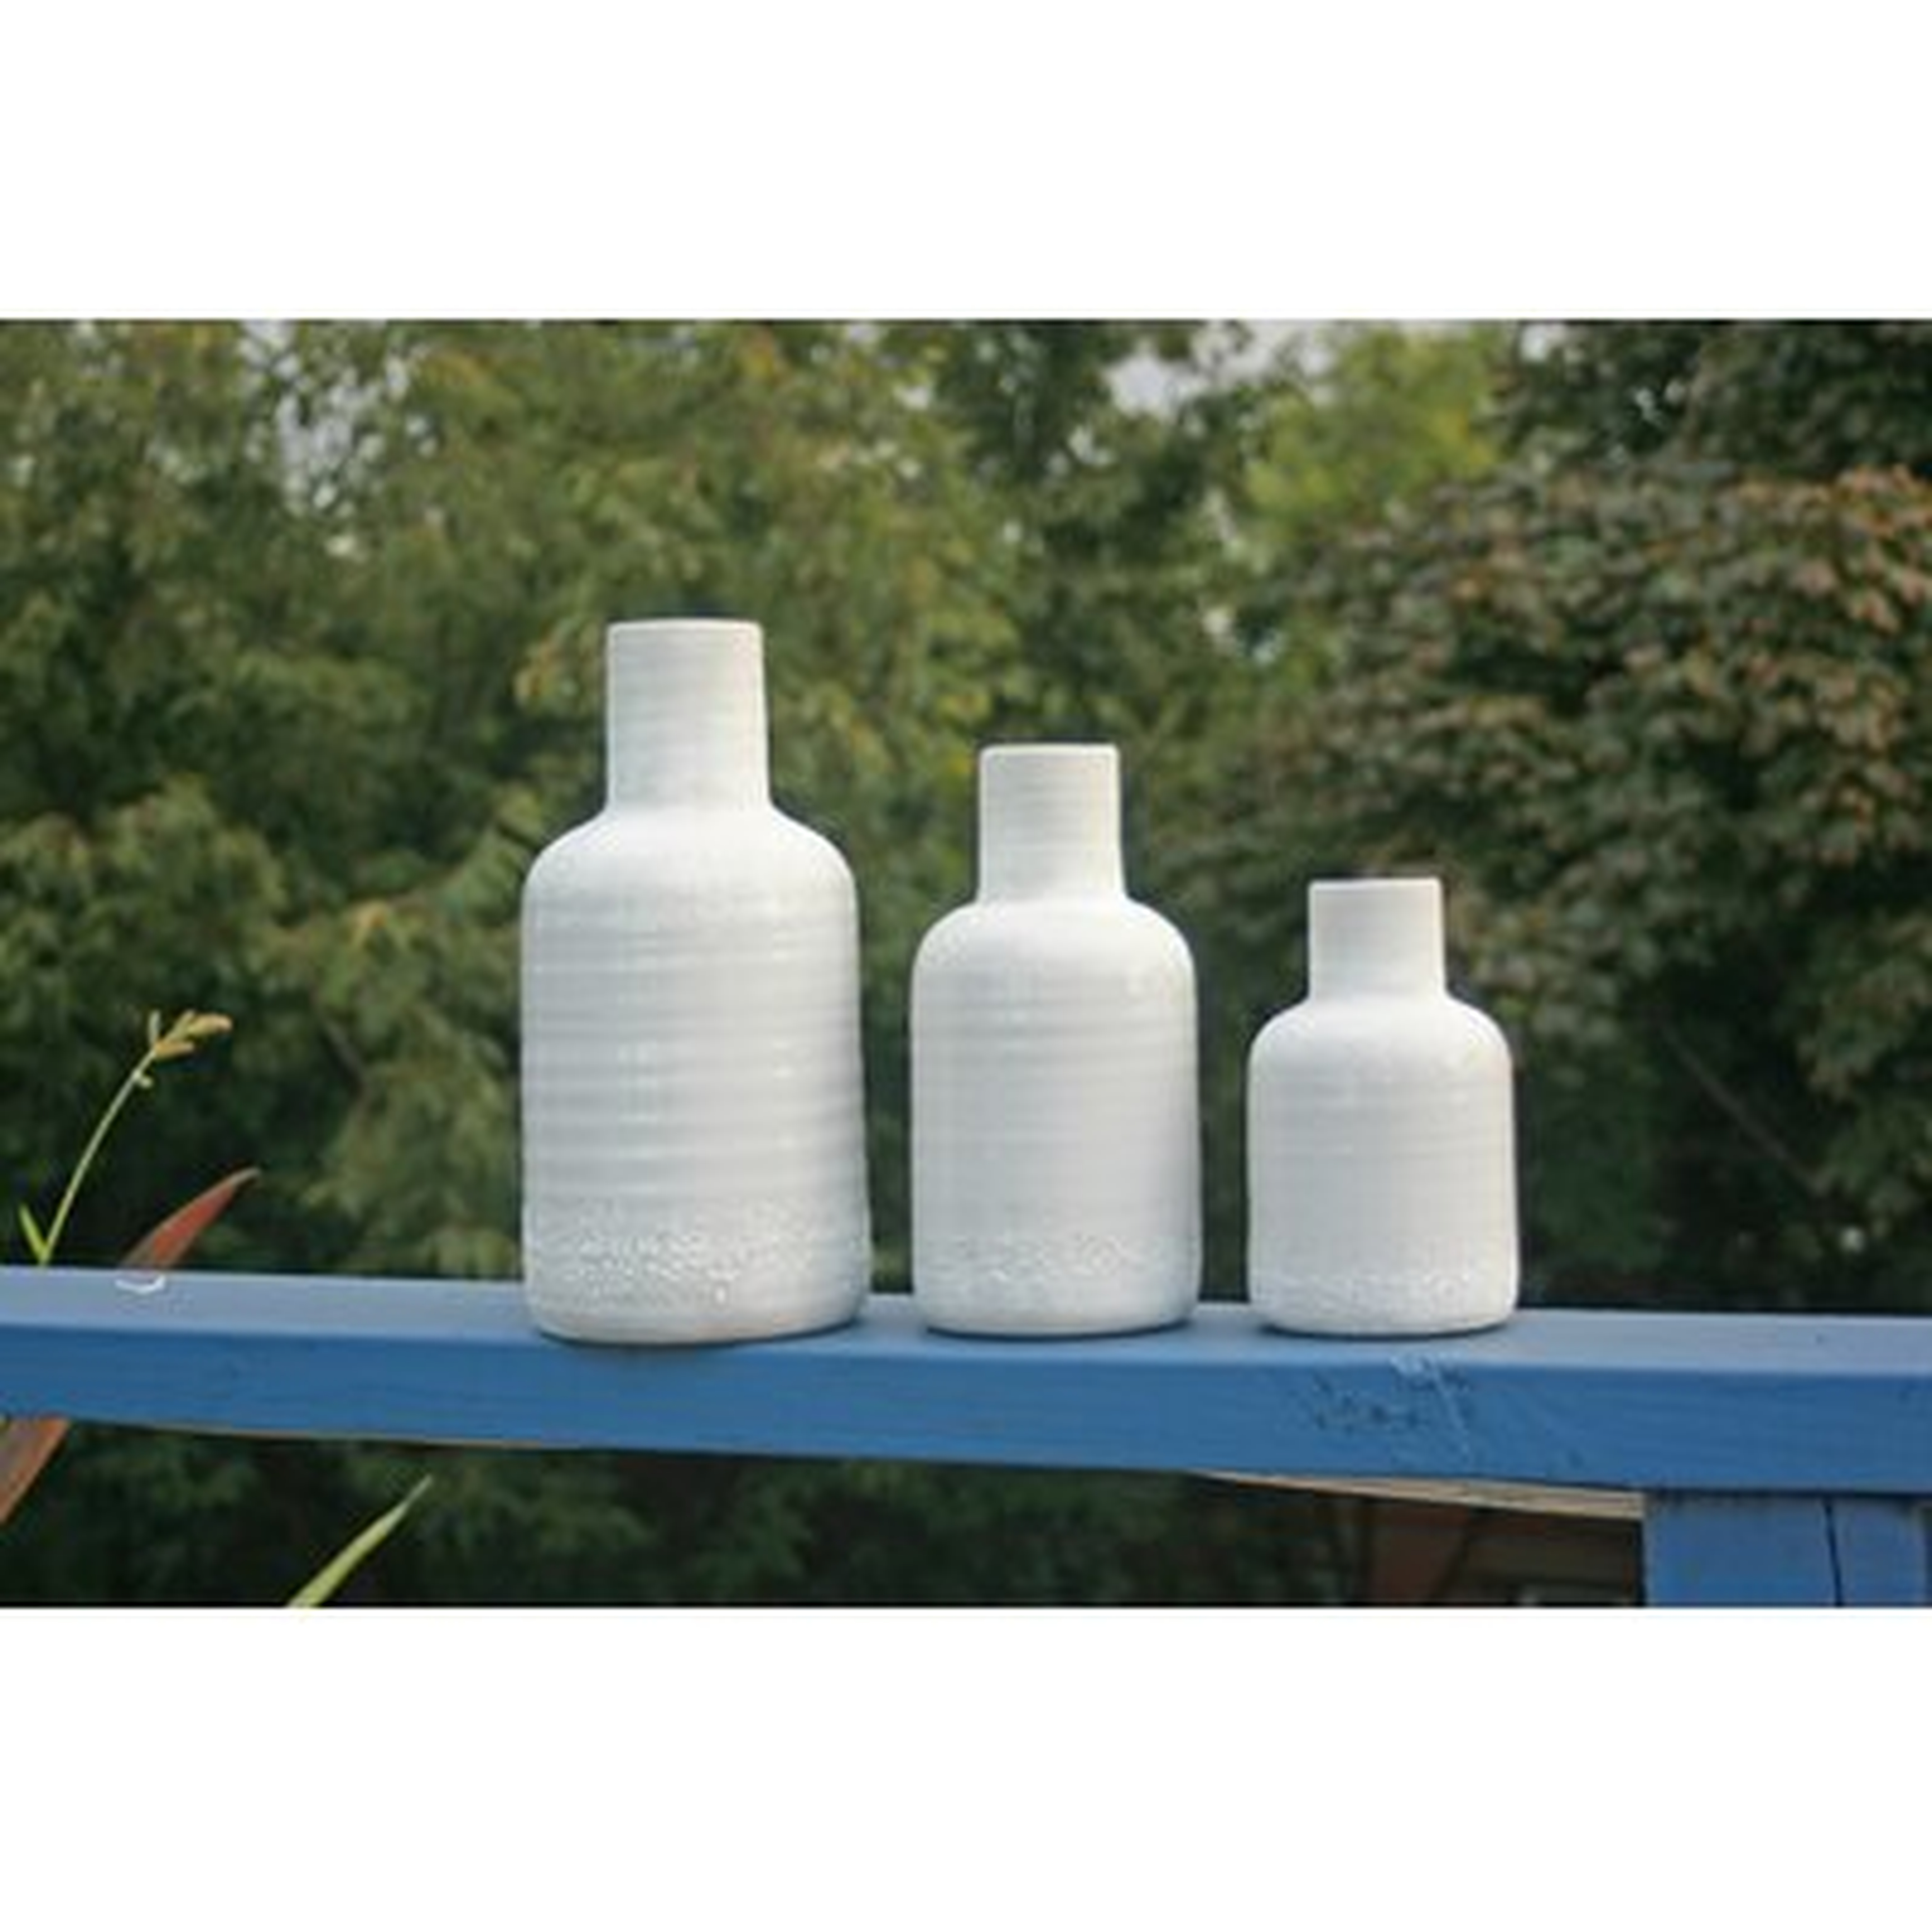 Ratcliffe White Ceramic Vases Set of 3 - Wayfair